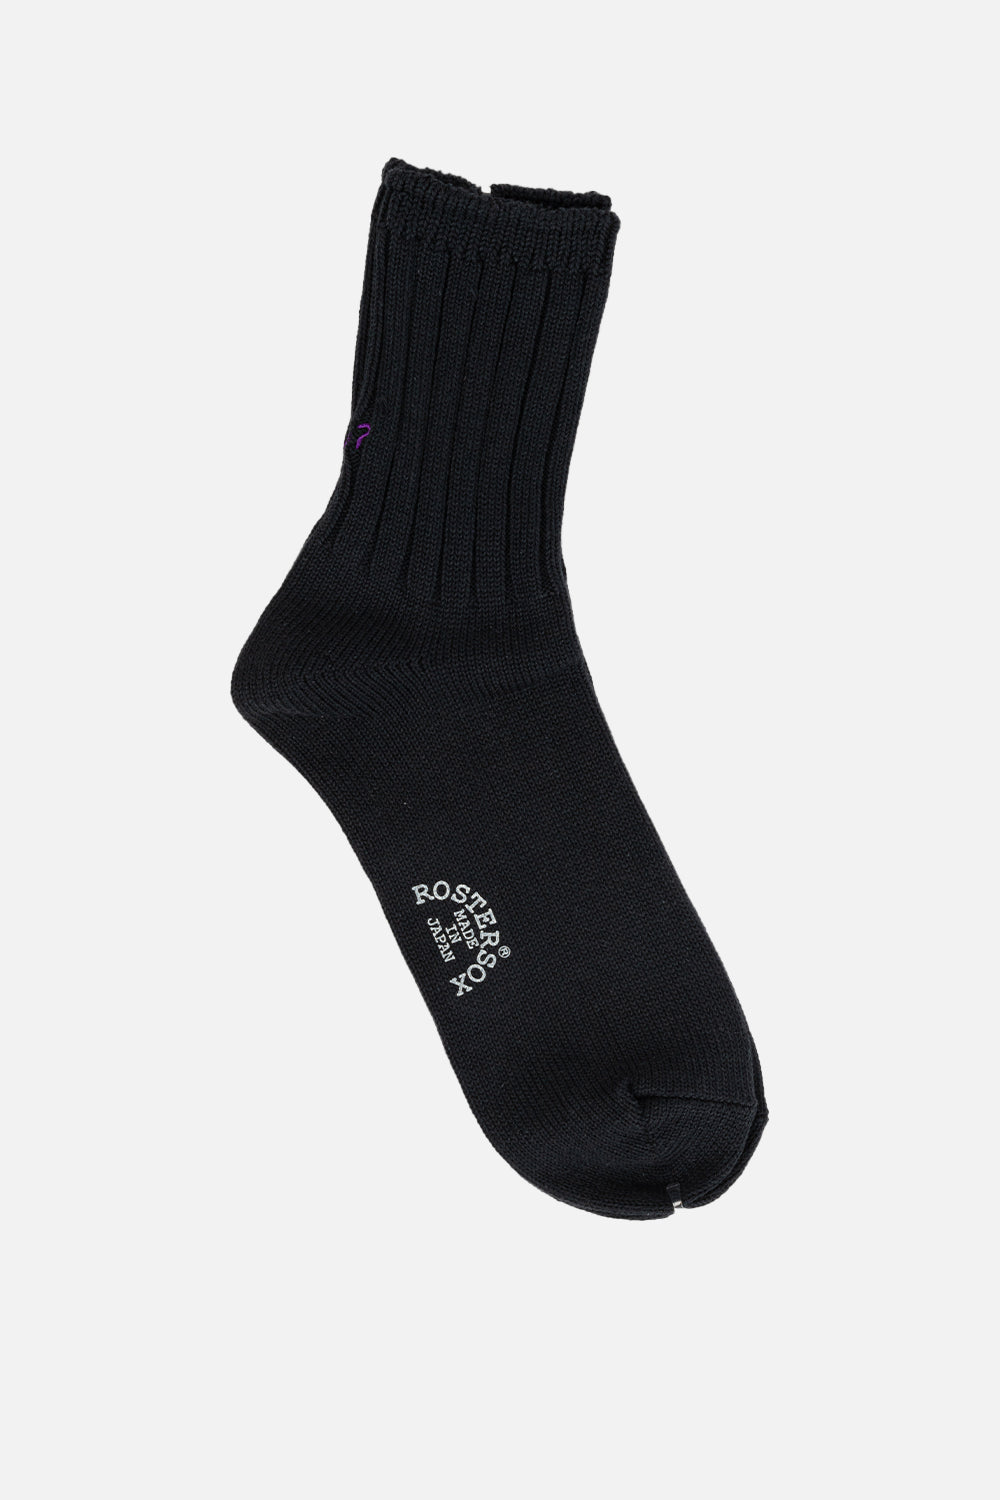 Rostersox-what-s-up-rib-black-socks